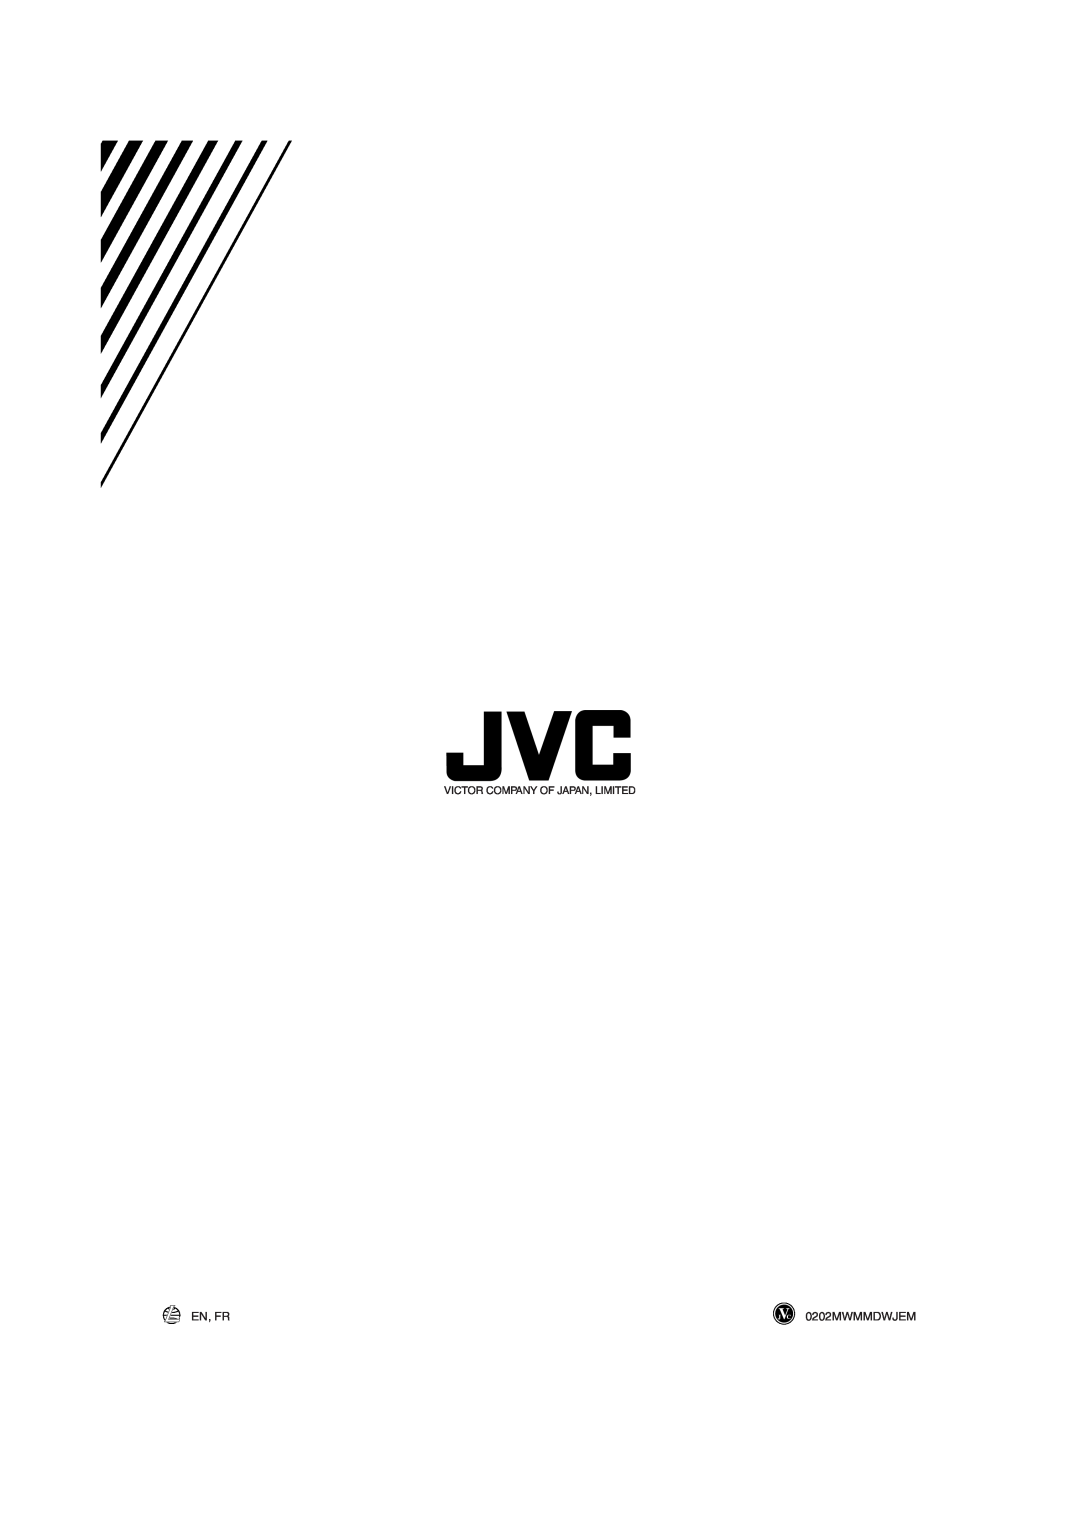 JVC FS-L30 manual En, Fr, 0202MWMMDWJEM, Victor Company Of Japan, Limited 